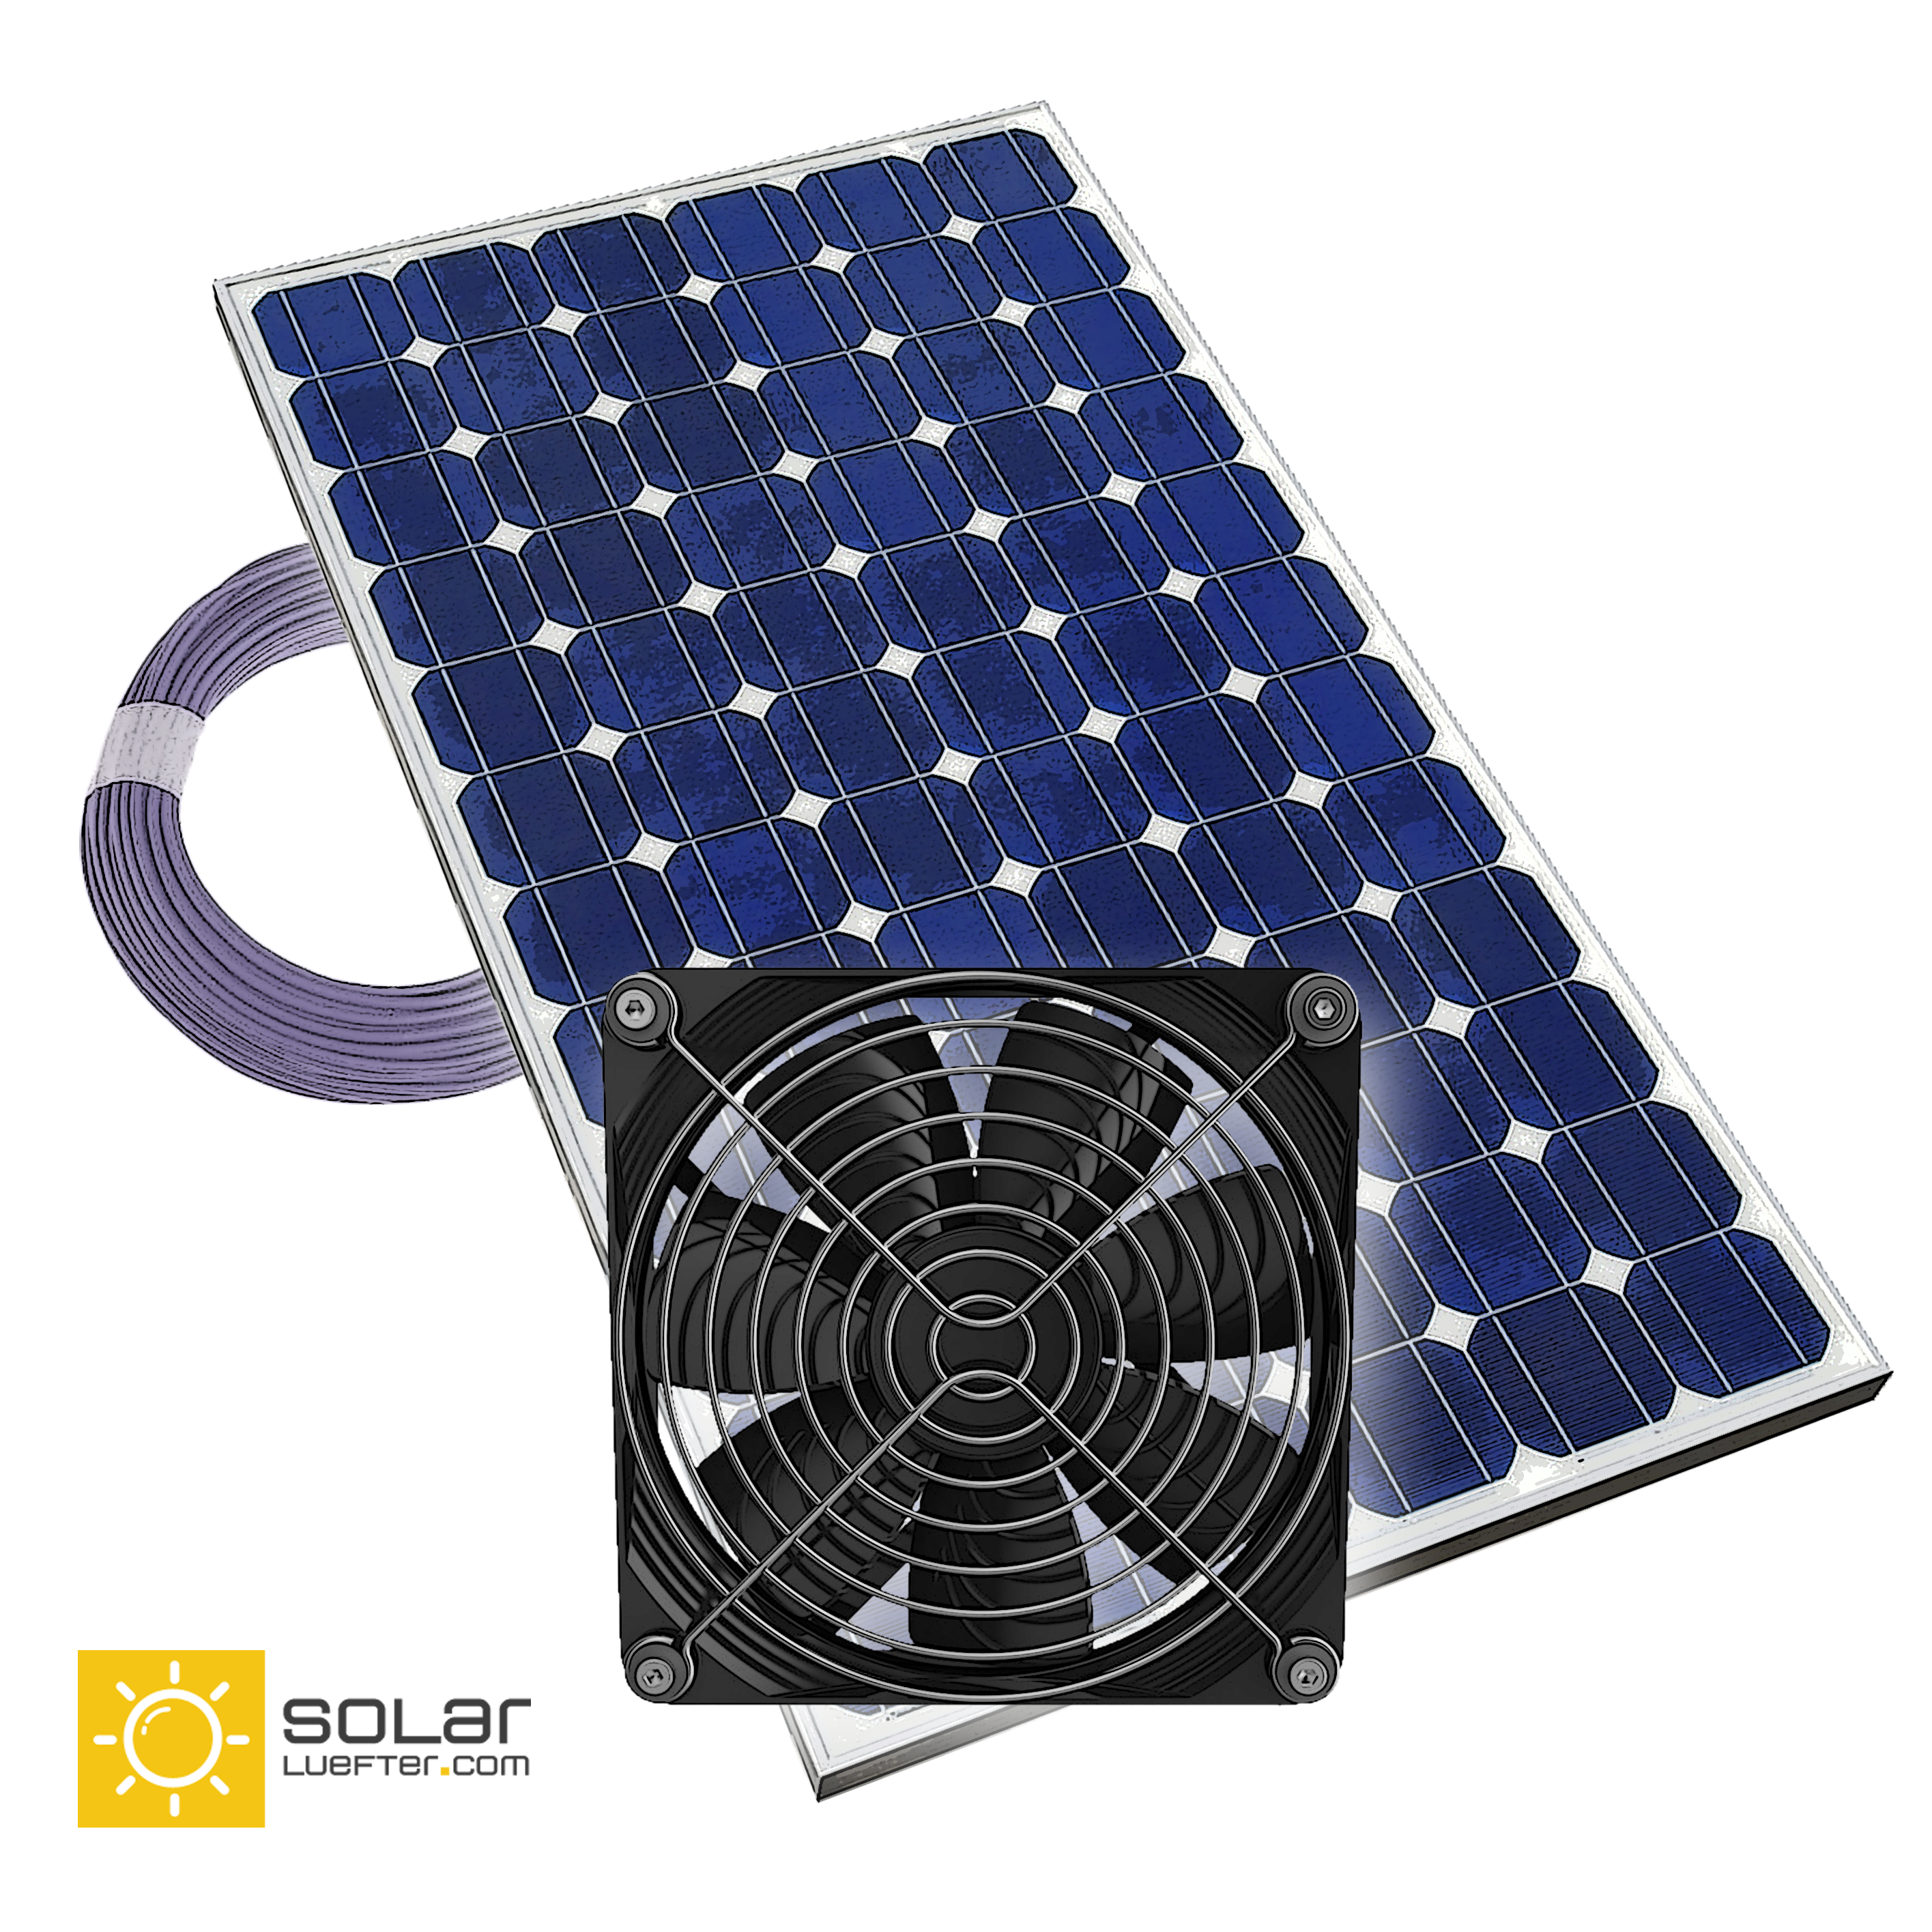 https://www.solarluefter.com/wp-content/uploads/2021/05/Produkt_1fach.png